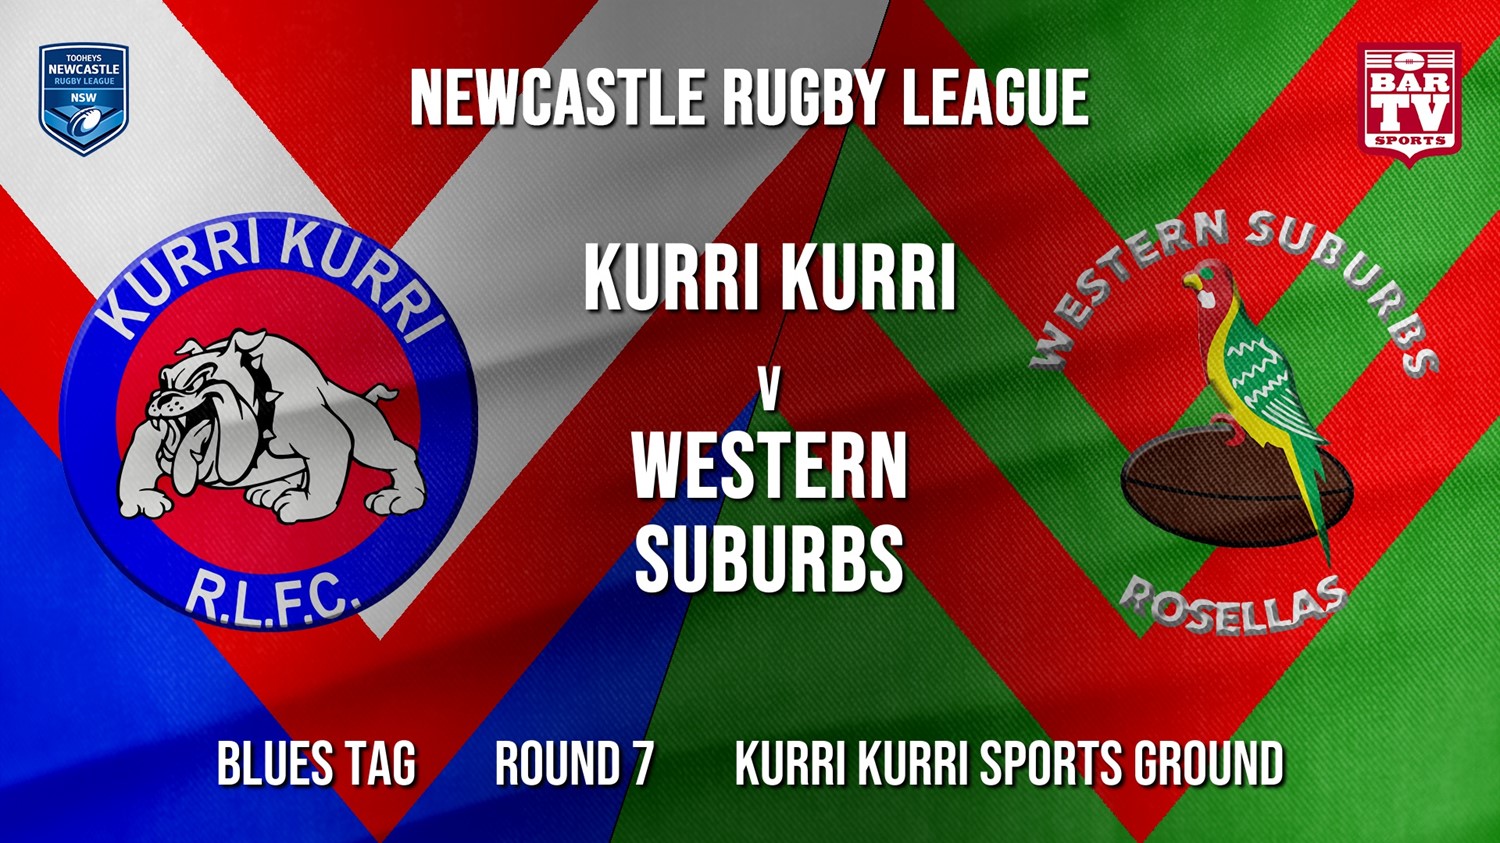 MINI GAME: Newcastle Rugby League Round 7 - Blues Tag - Kurri Kurri Bulldogs v Western Suburbs Rosellas Slate Image